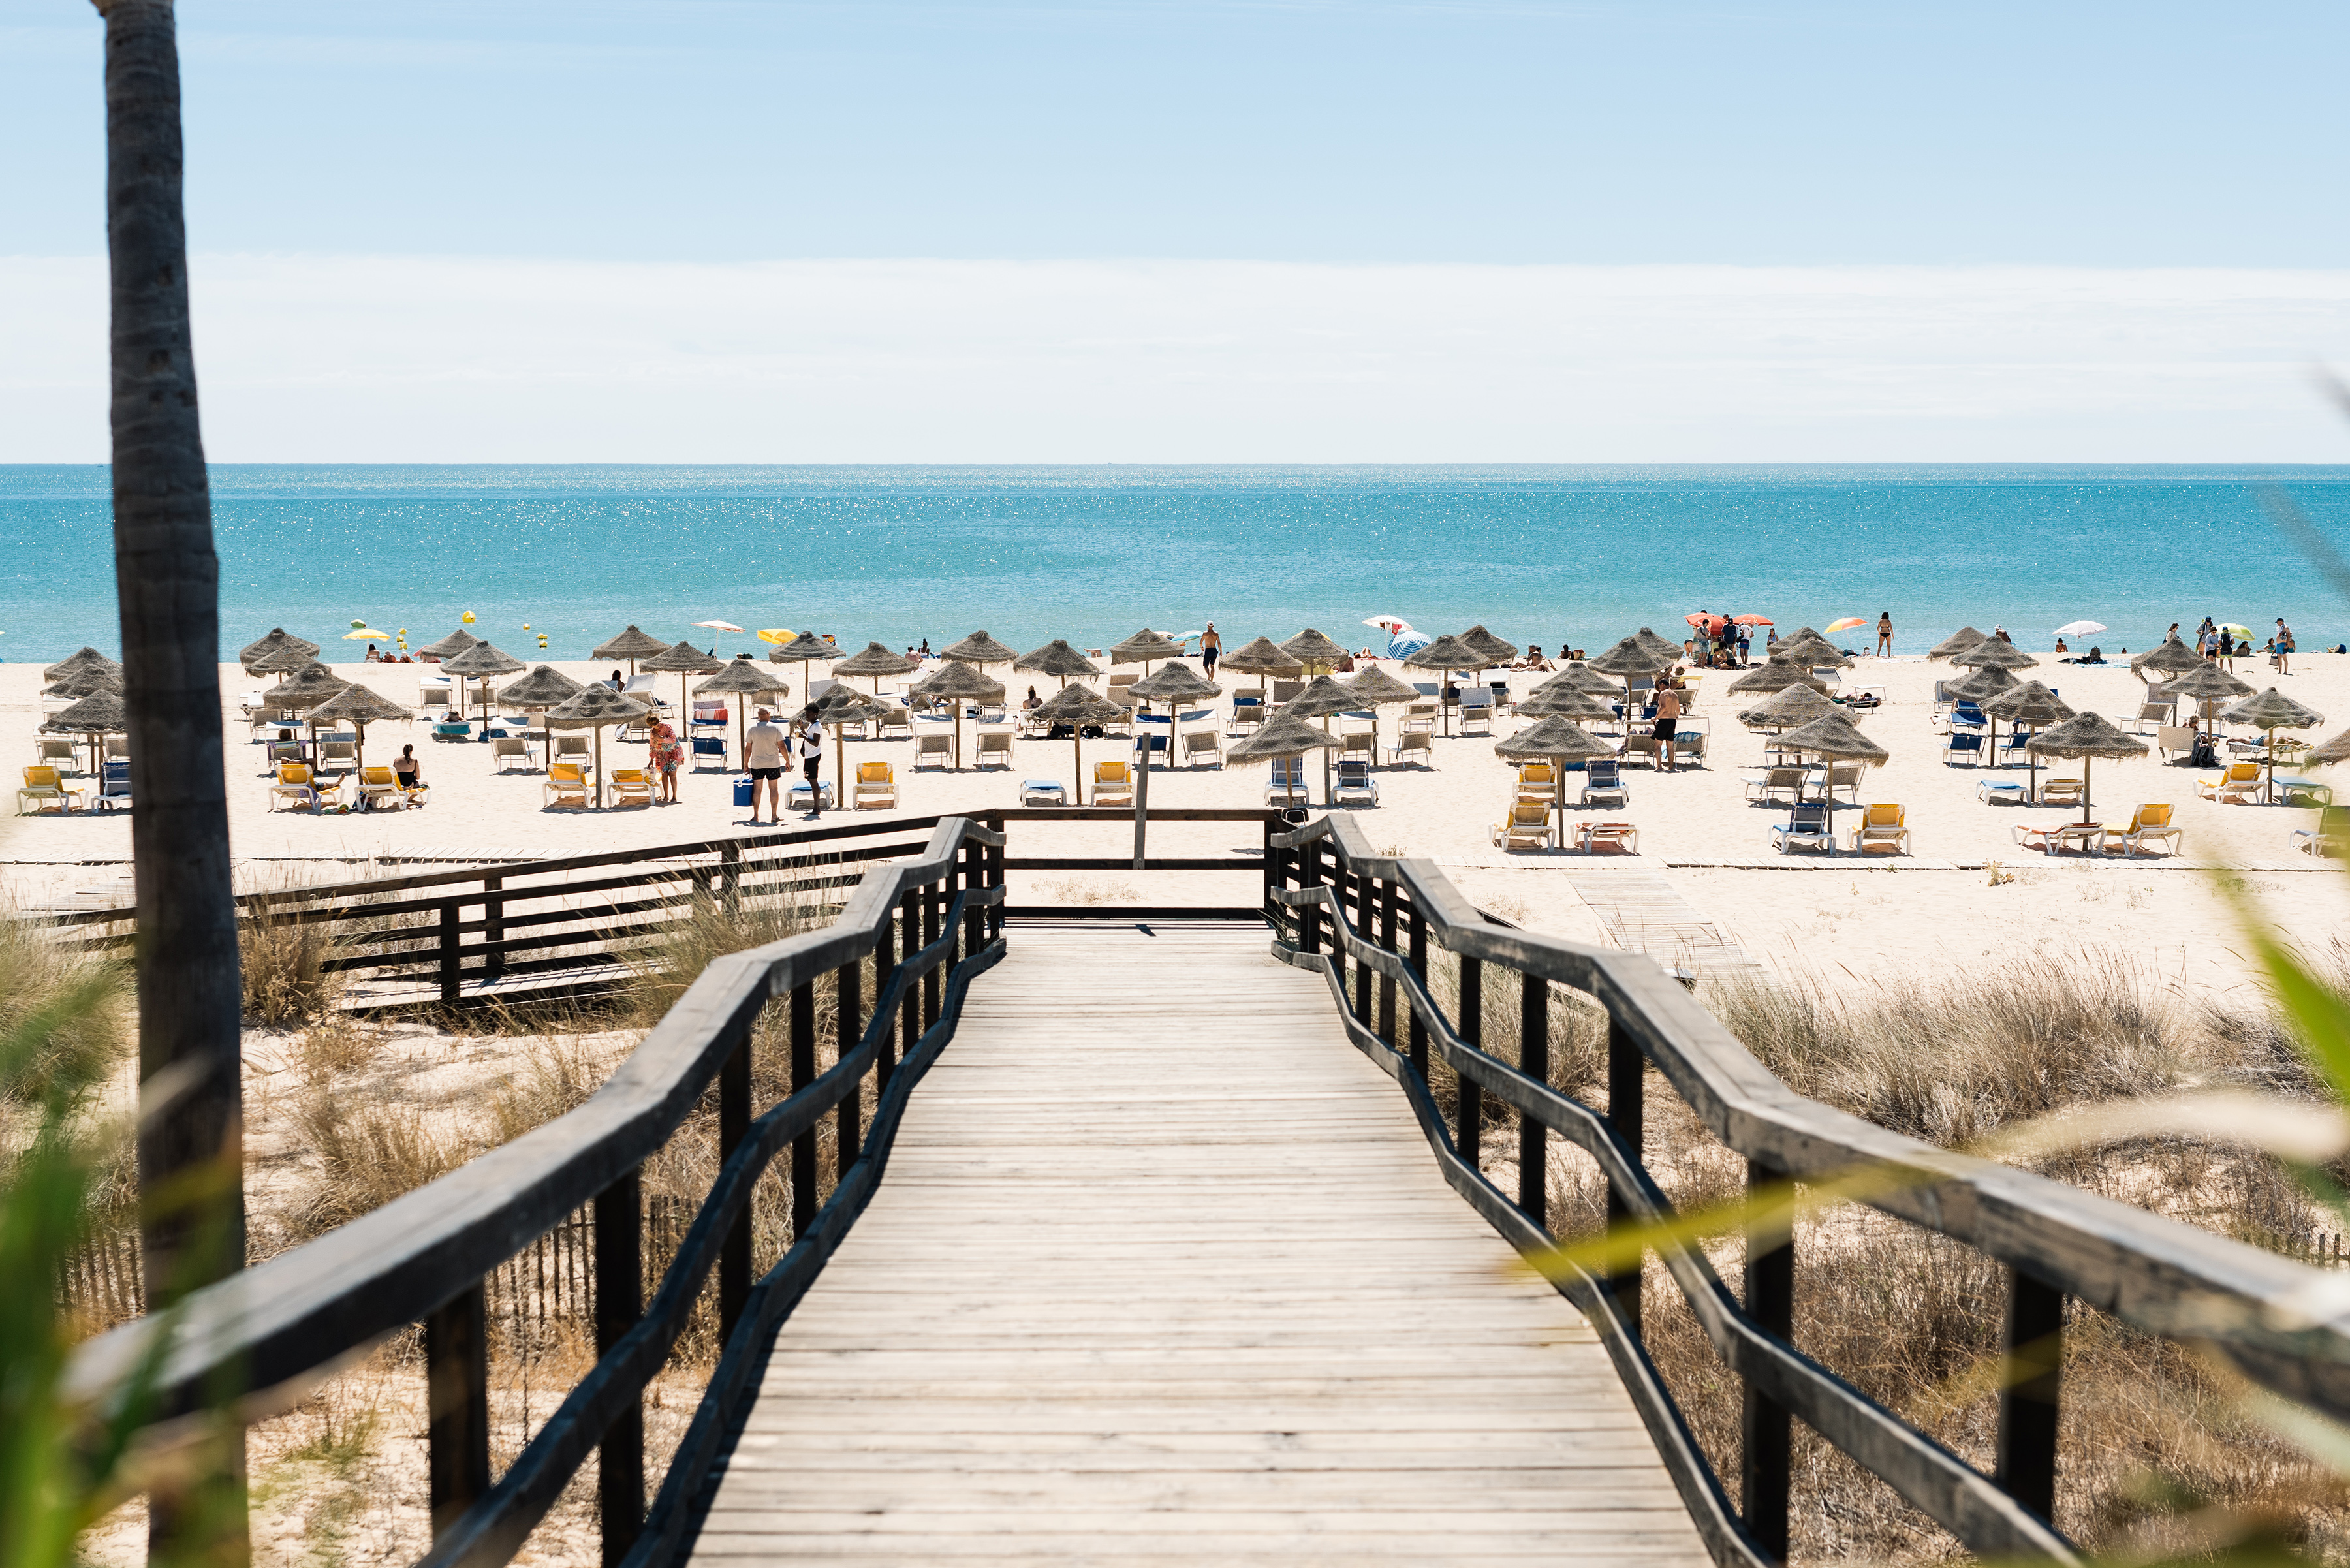 Ingreso a Meia Praia, más conocida como "la playa bitcoin" en Lagos, Portugal  (Rodrigo Cardoso/The New York Times)